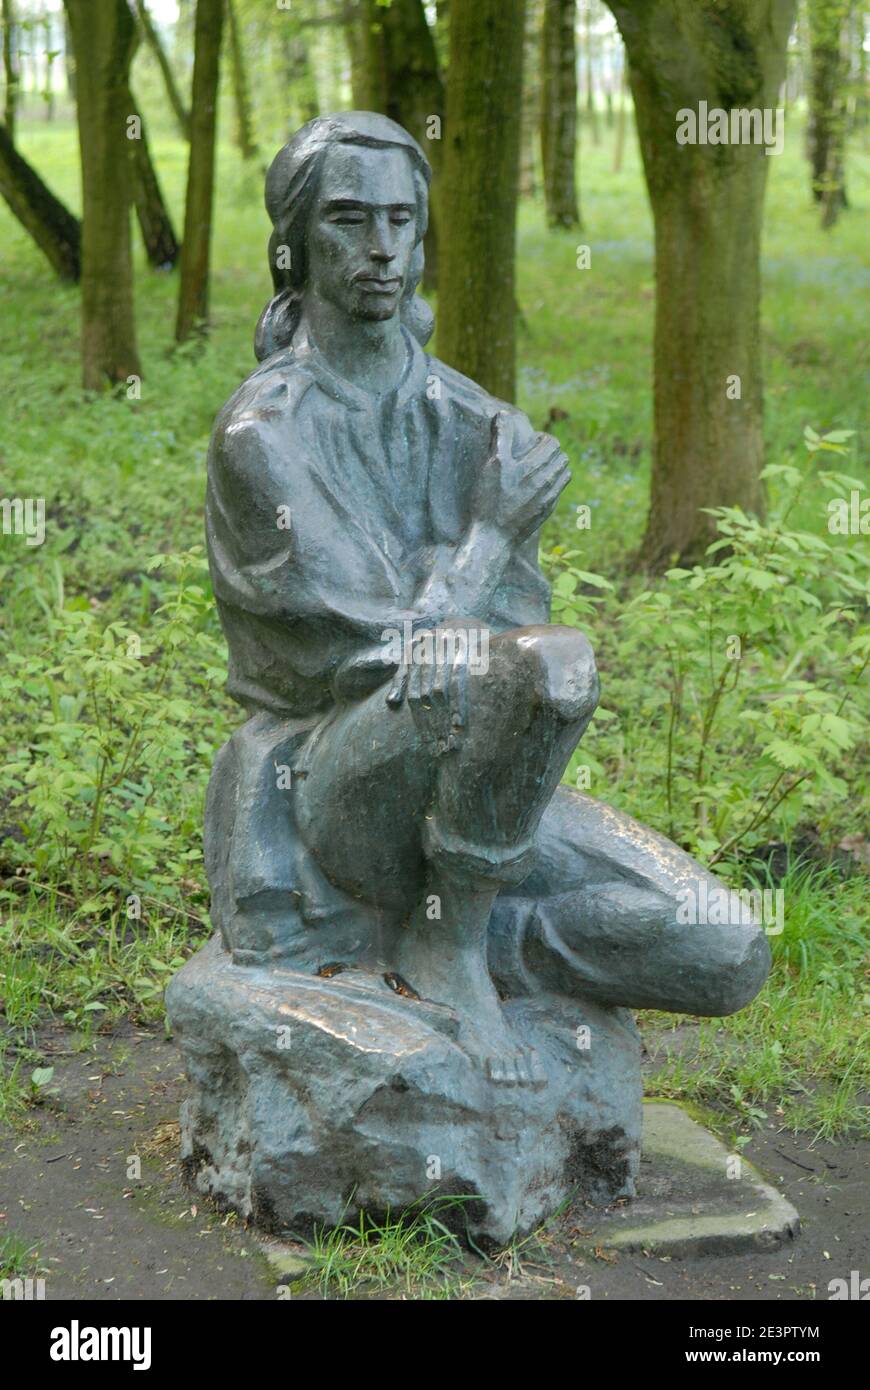 Park sculpture in Lesya Ukrainka estate, Kolodiazhne village. Stock Photo